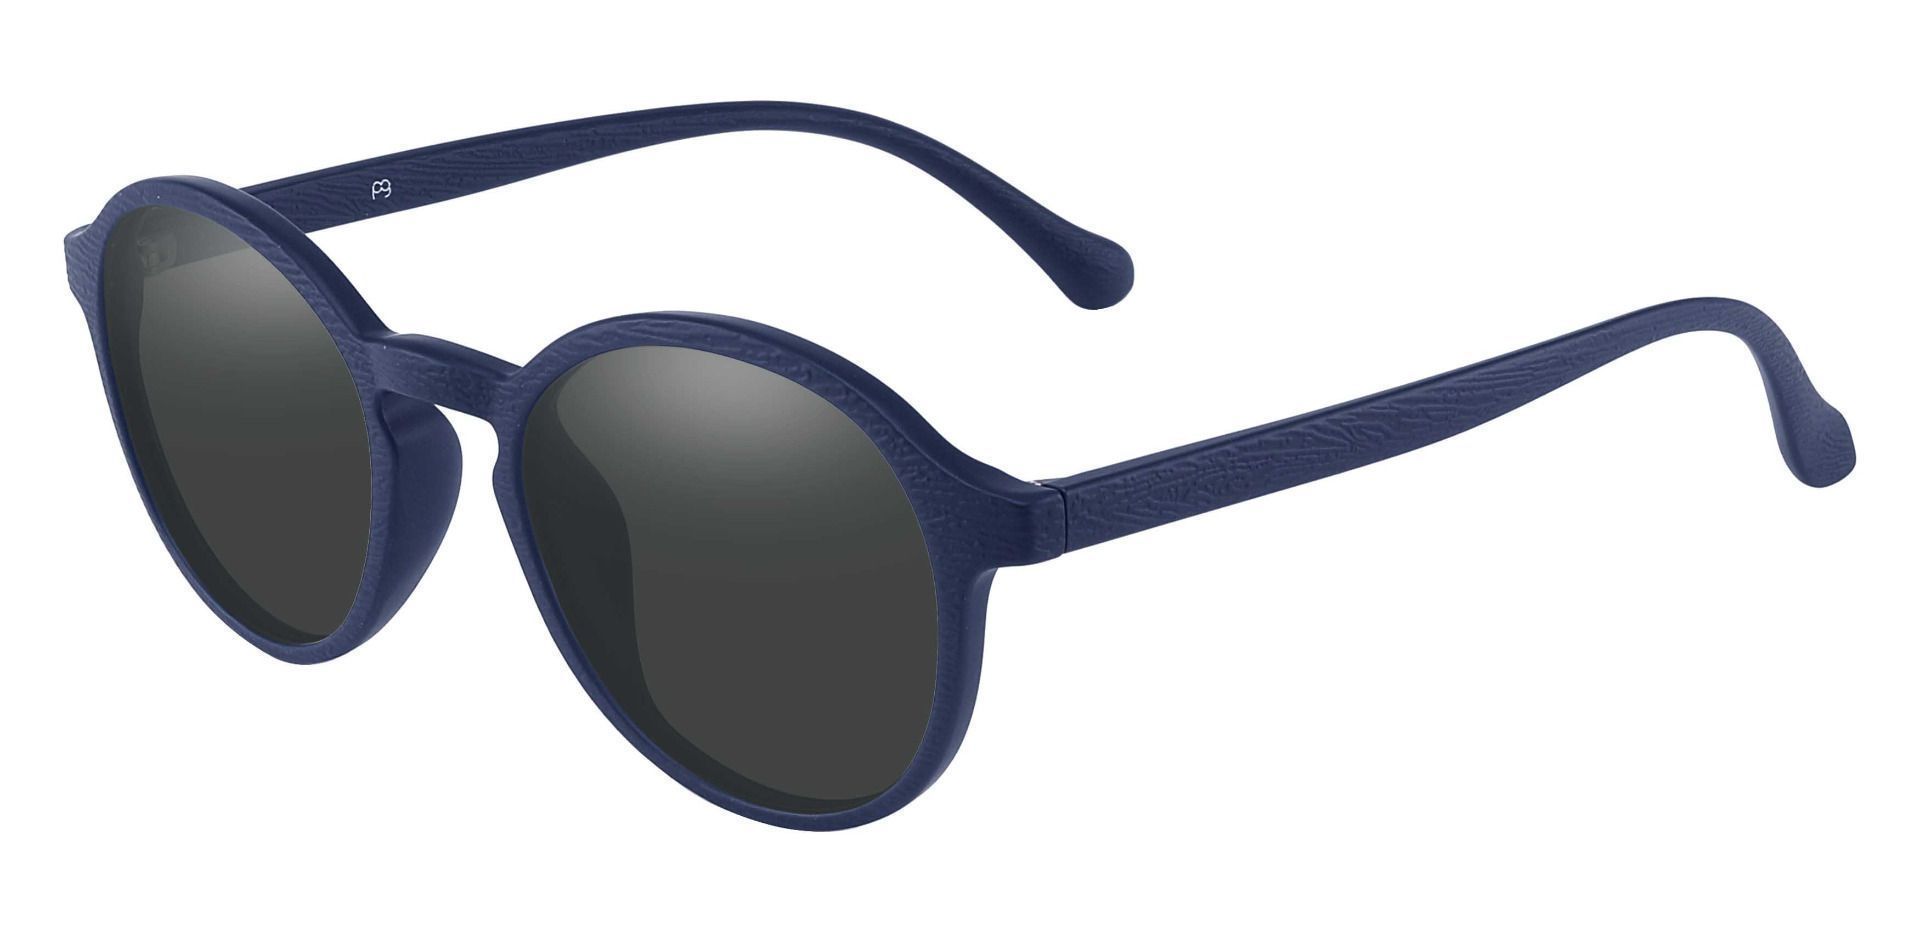 Whitney Round Reading Sunglasses - Blue Frame With Gray Lenses